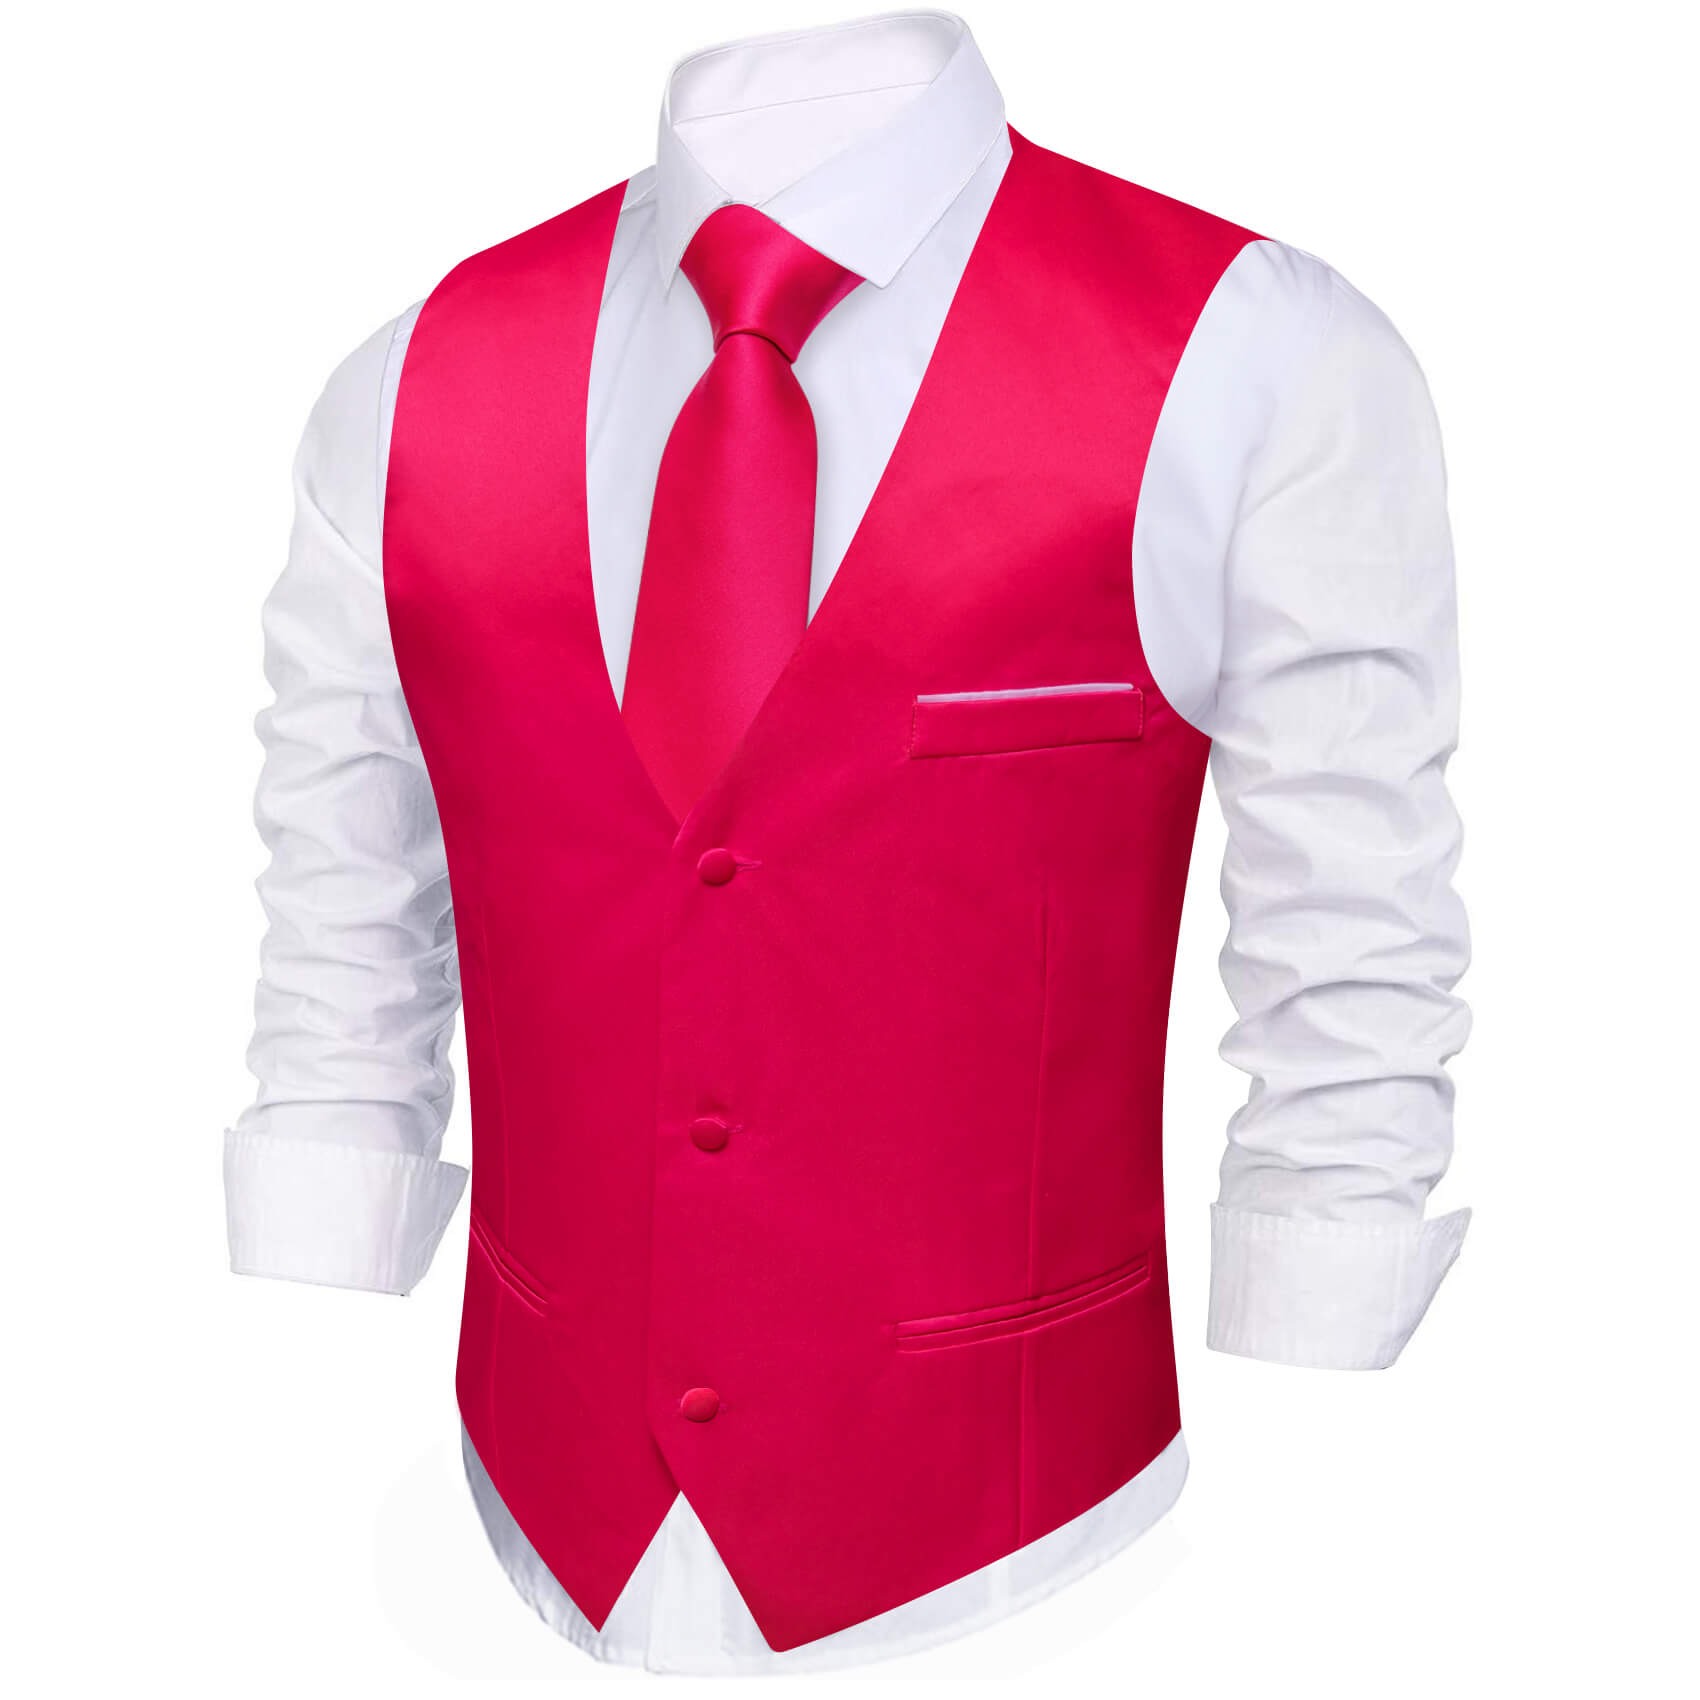  Mens Waistcoat Rose Red Solid No Collar Vest